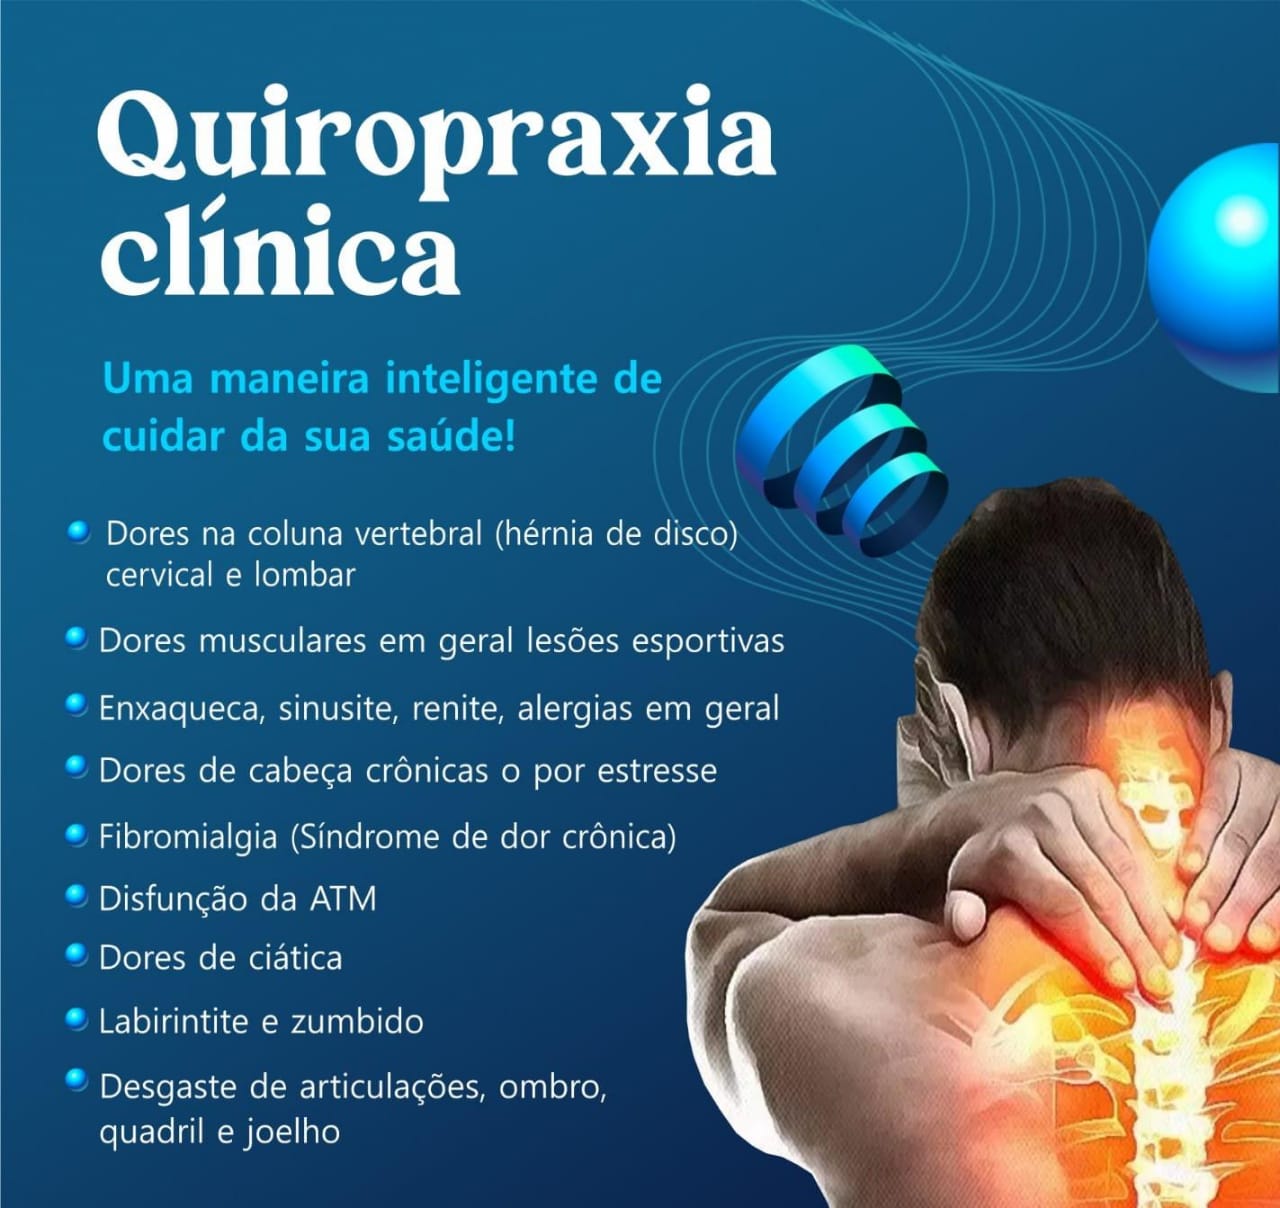 Quiropraxia clínica